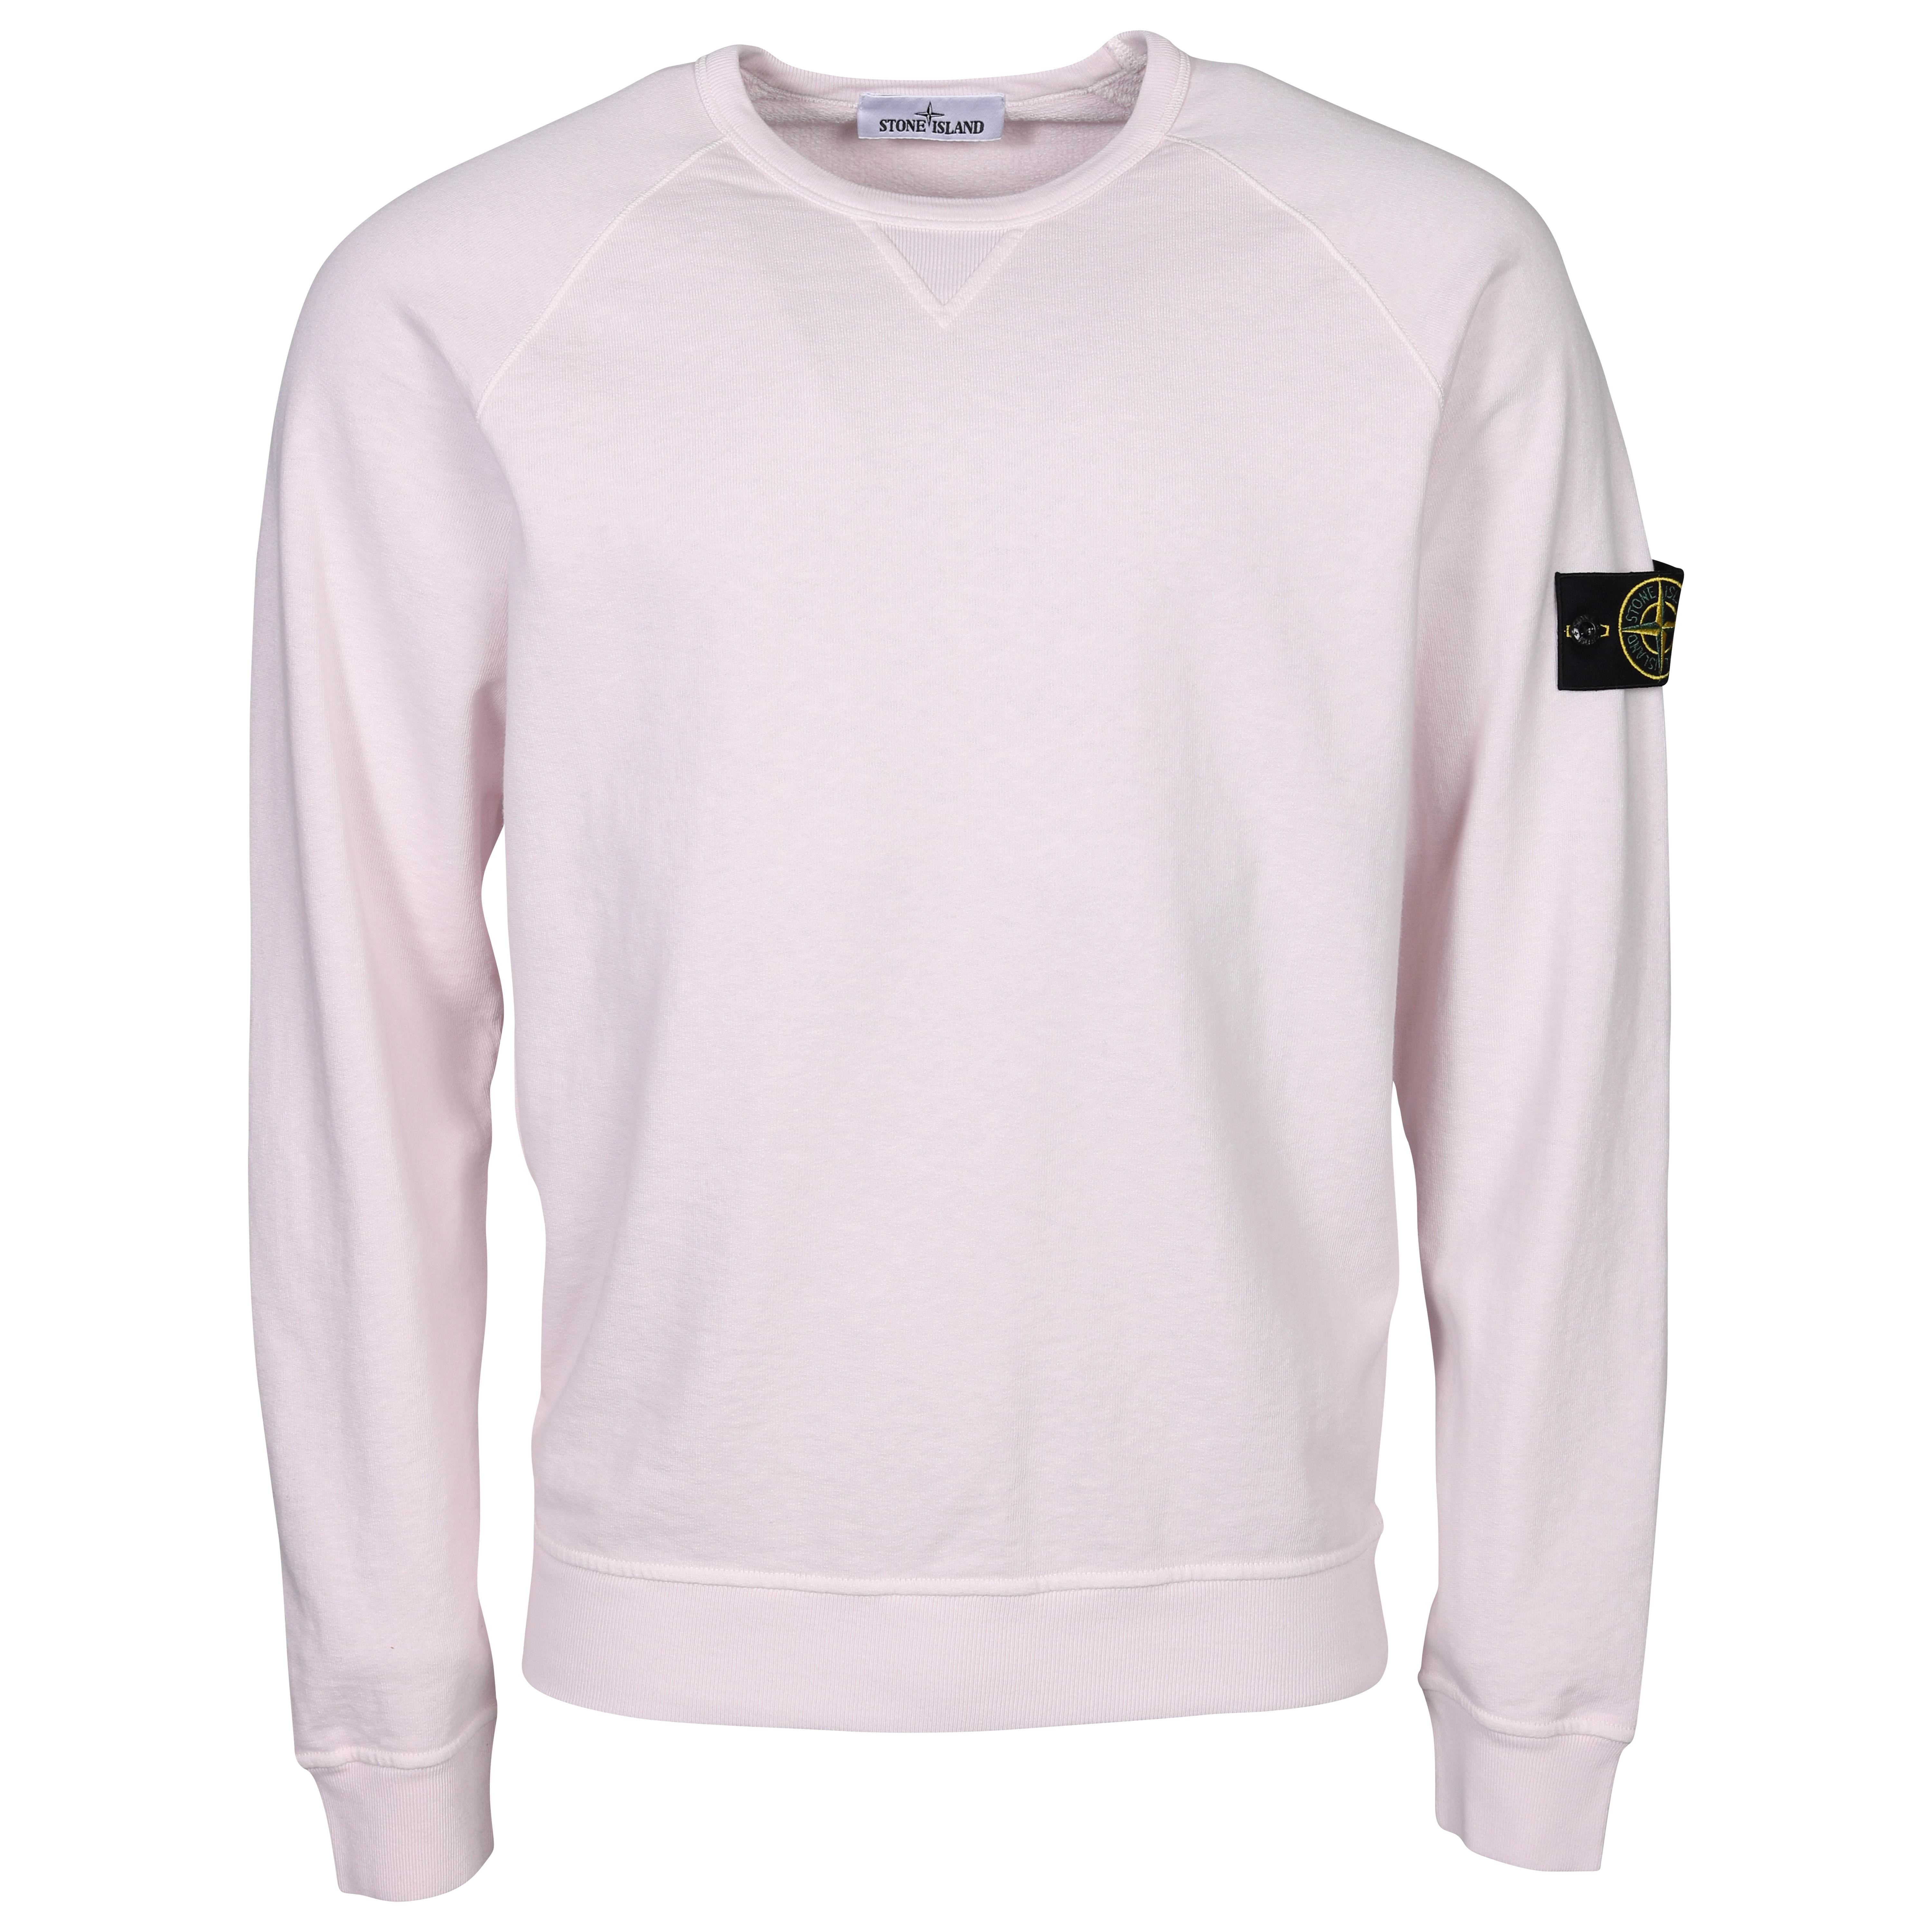 Stone Island Sweatshirt in Washed Light Pink 2XL